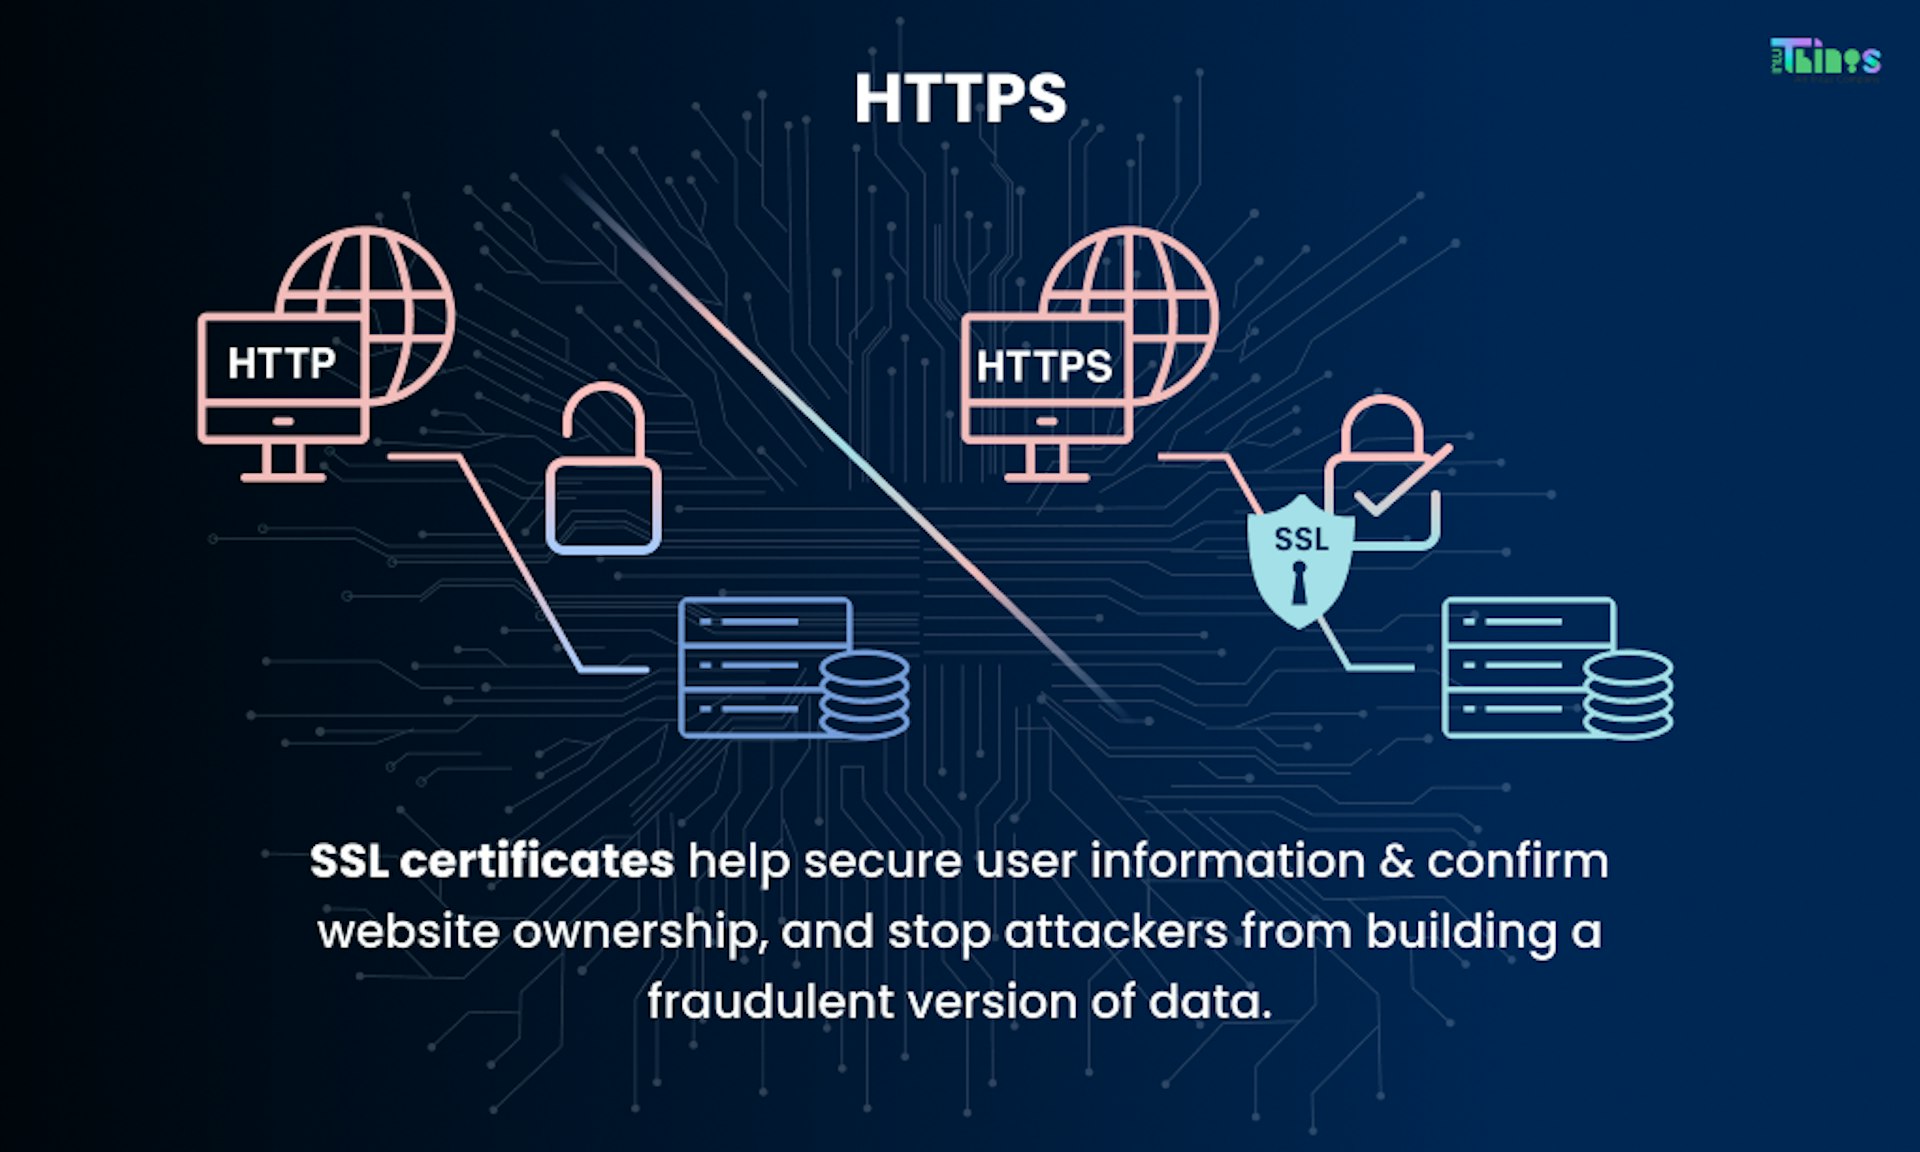 Hyper Text Transfer Protocol (HTTPS)